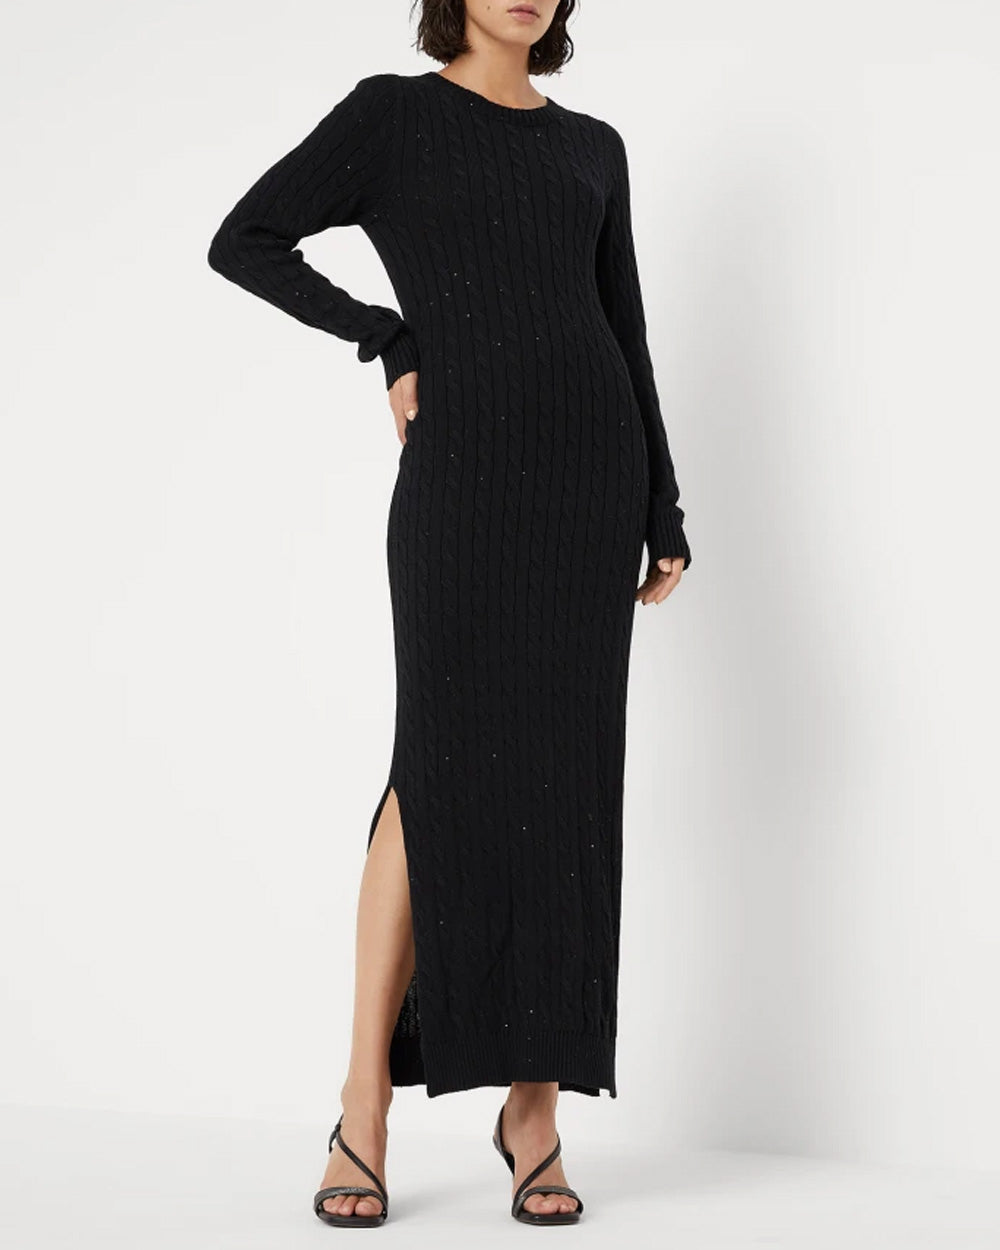 Black Knit Long Sleeve Sweater Dress